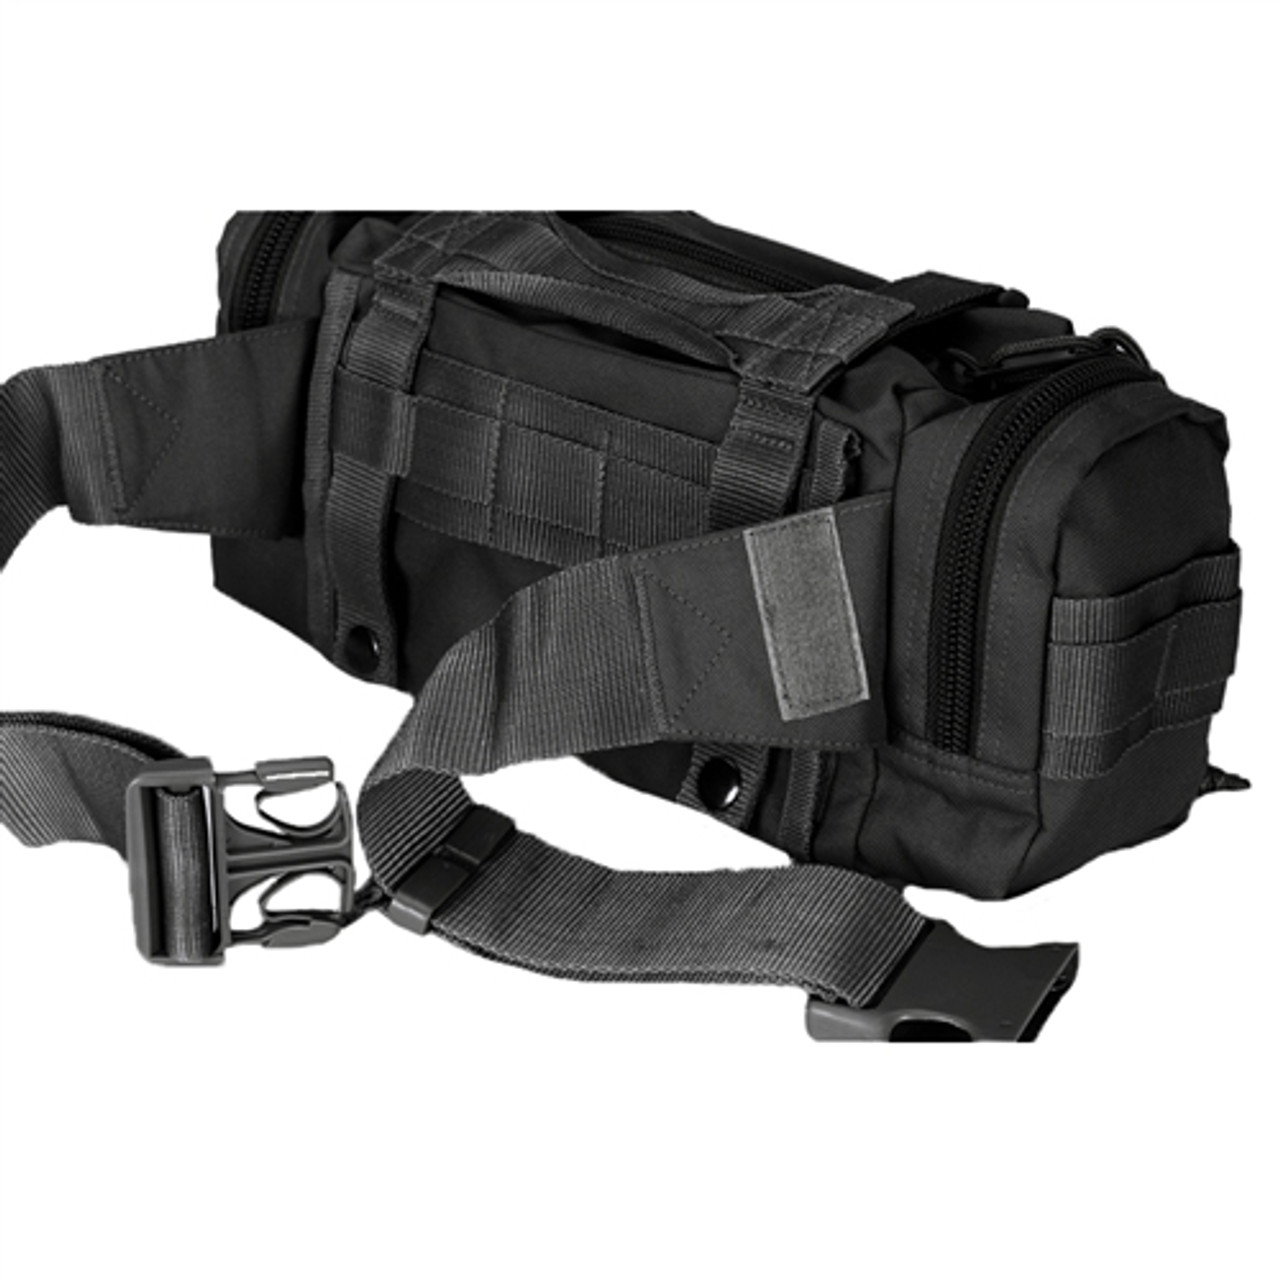 Black Response Pack By Snugpak | Military Luggage